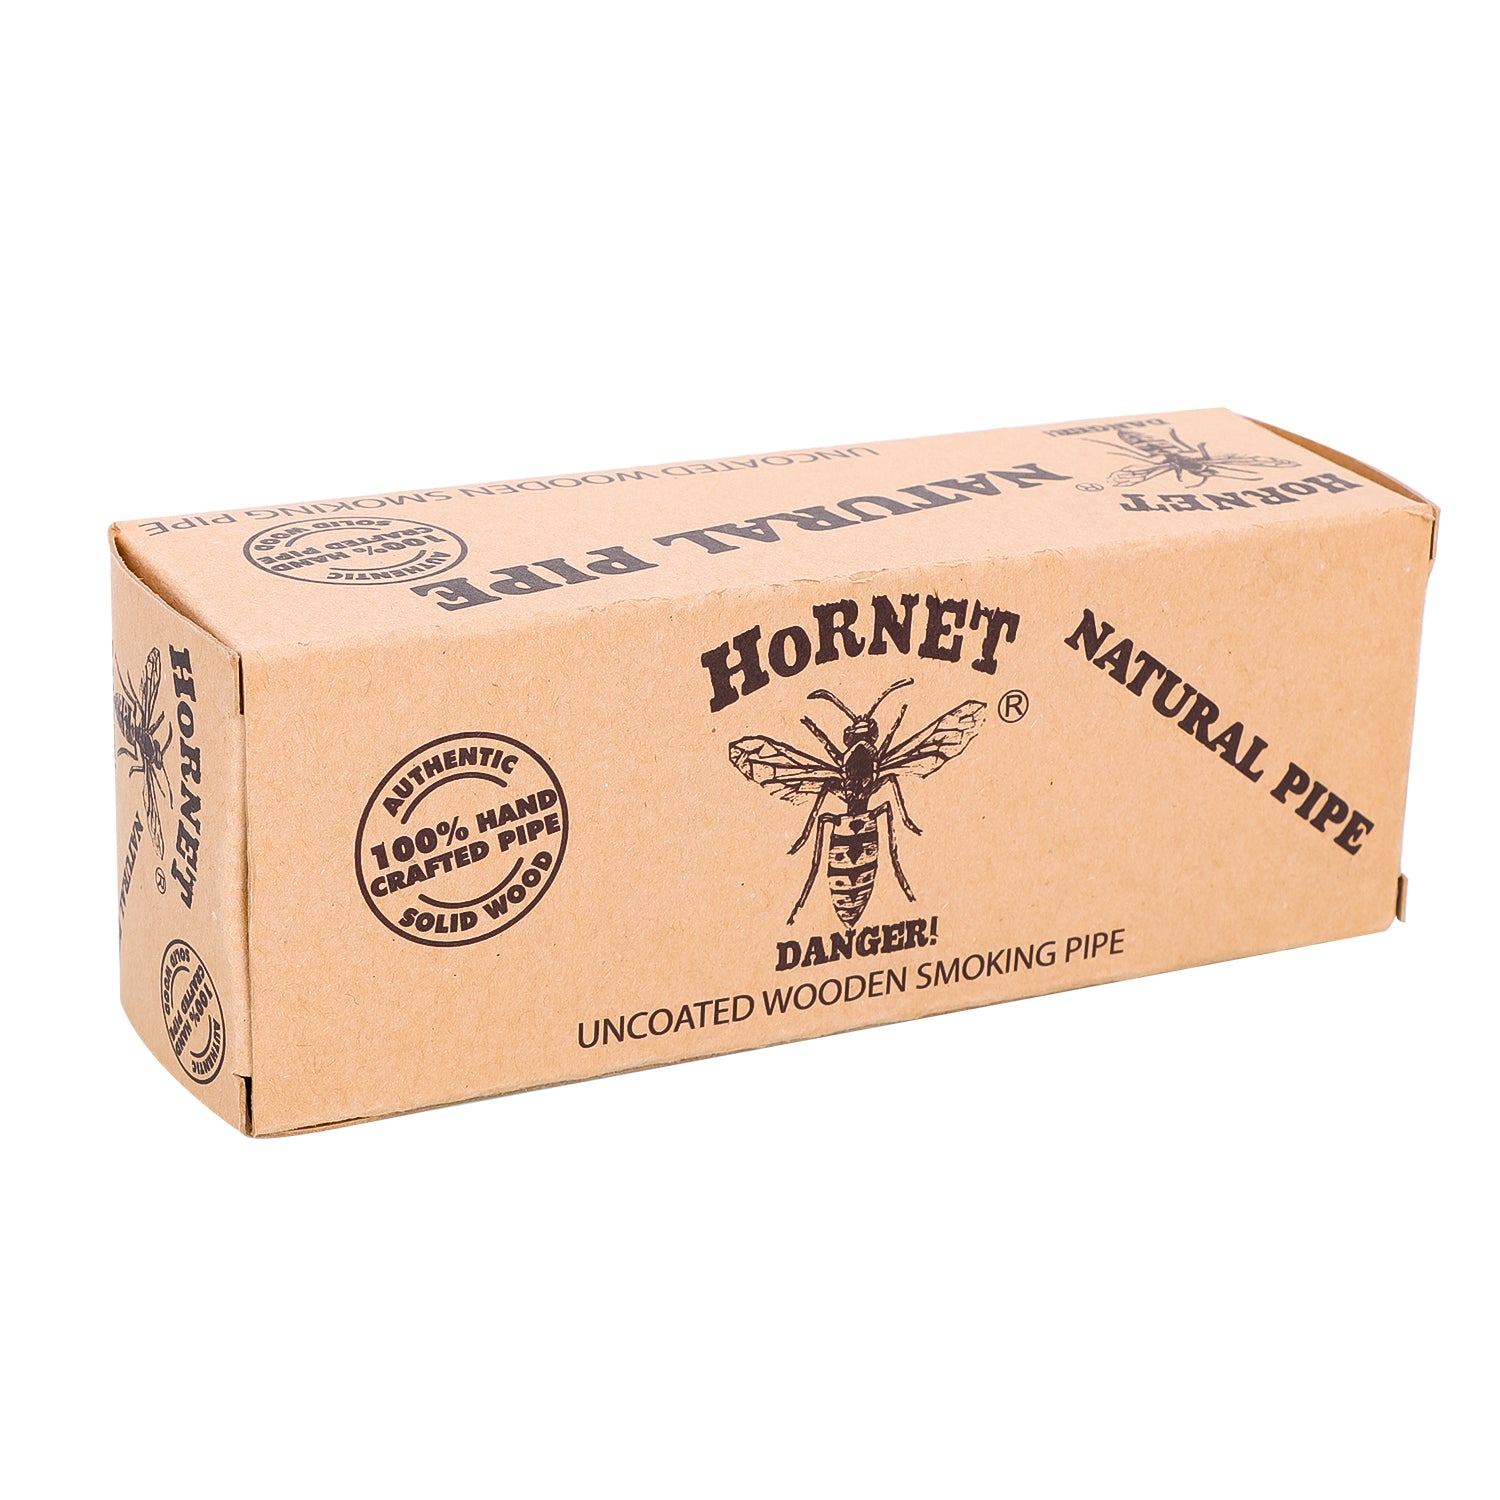 HORNET Conventional wood pipe flannelette bag Hornet 1 pcs/ display box